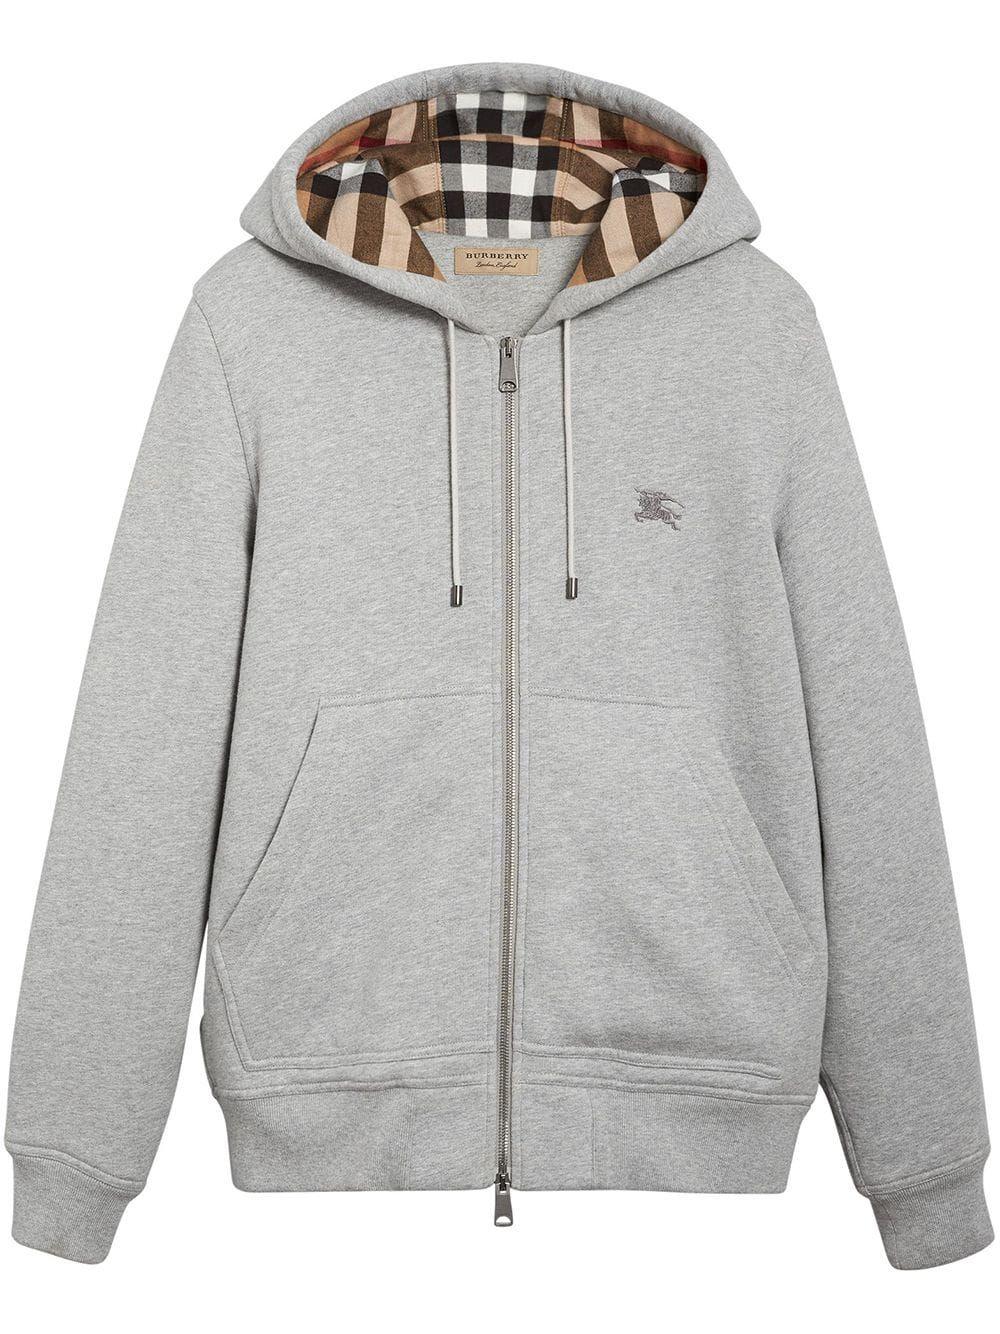 Burberry Check Detail Hooded Sweatshirt in Grey for Men | Lyst Australia